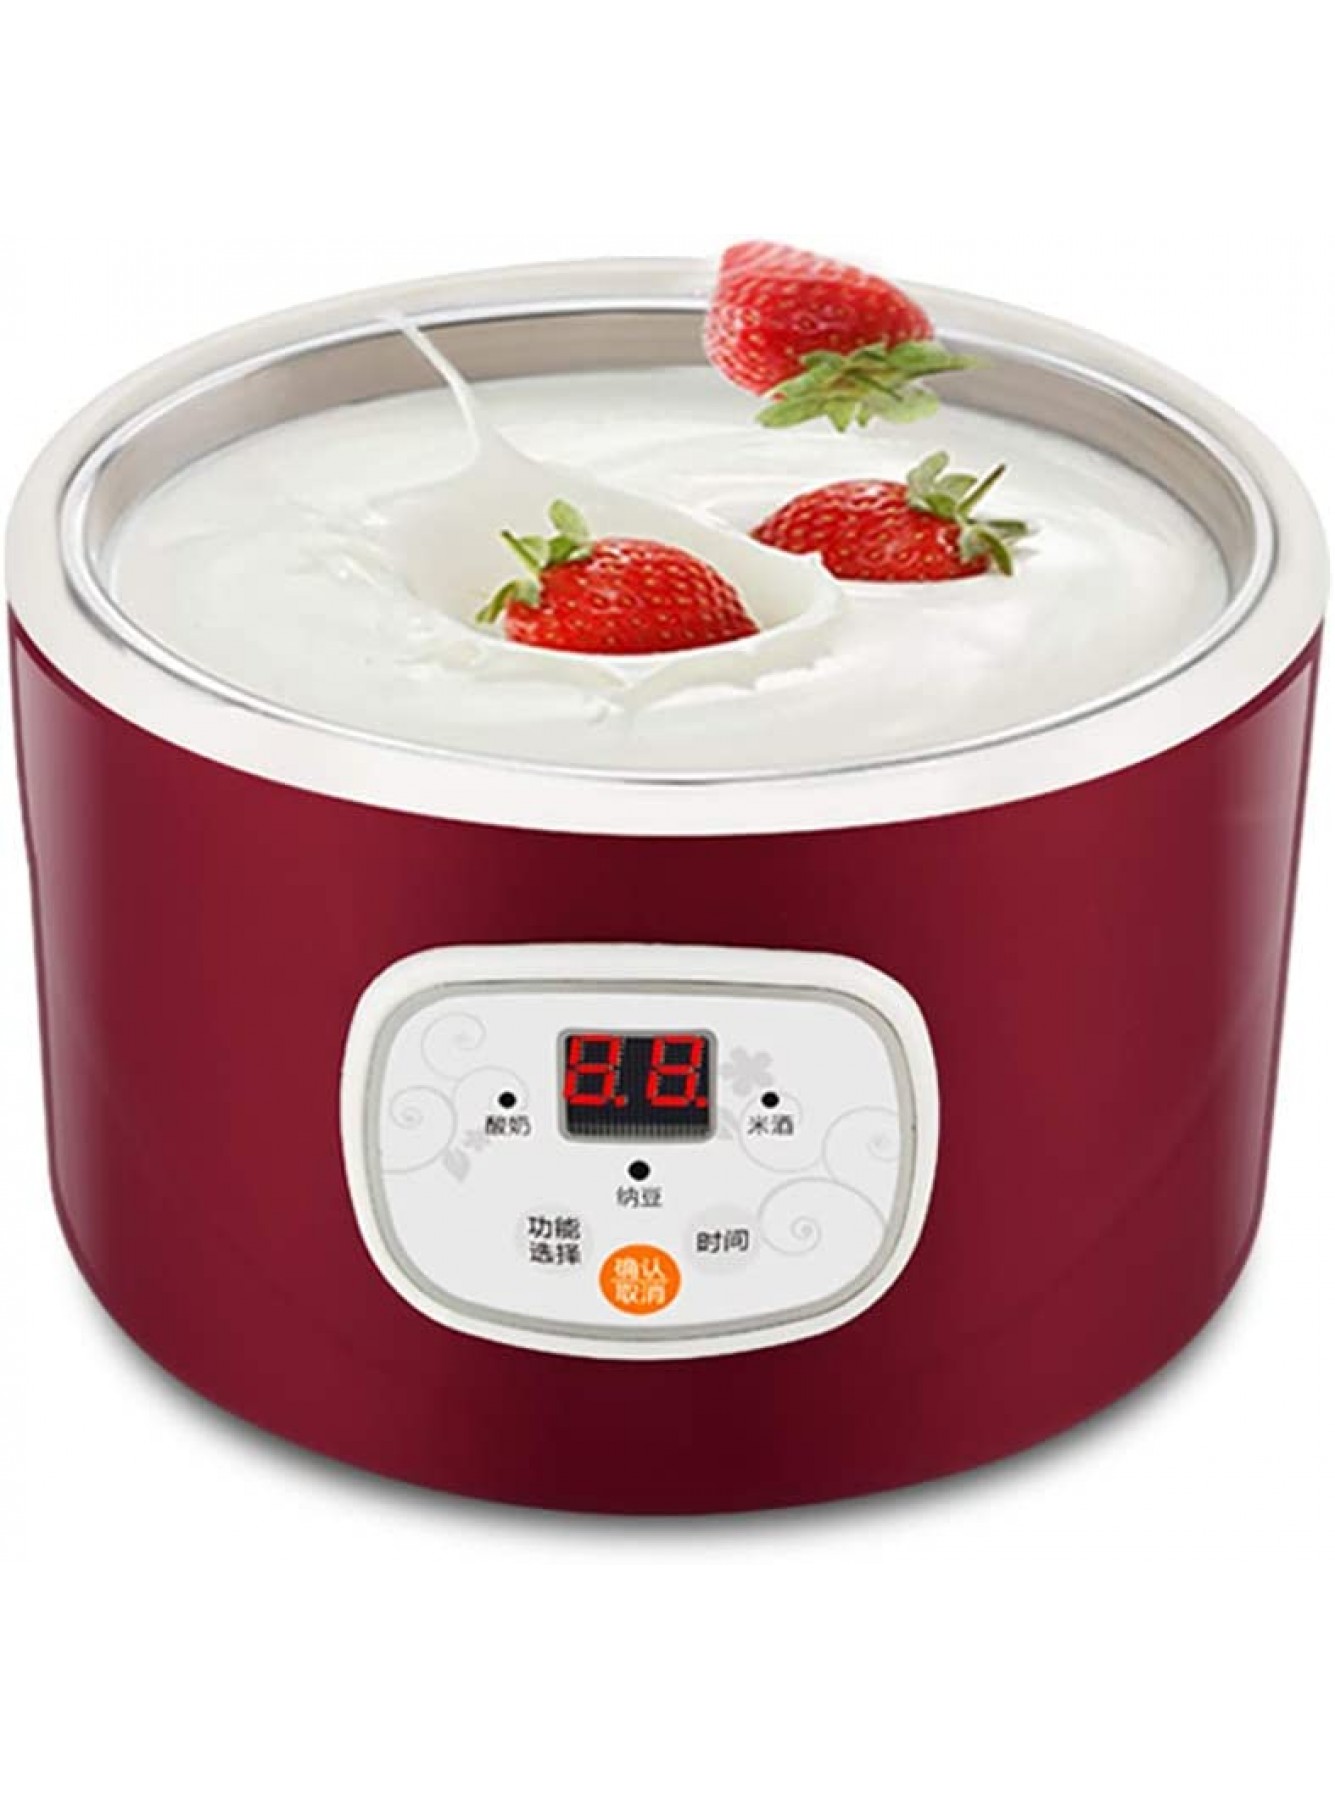 Yogurt Maker Frozen Yogurt Machine Automatic Digital Yogurt Maker With 1L capacity – Electric Easy Yogurt Maker Machine B07KR7713W